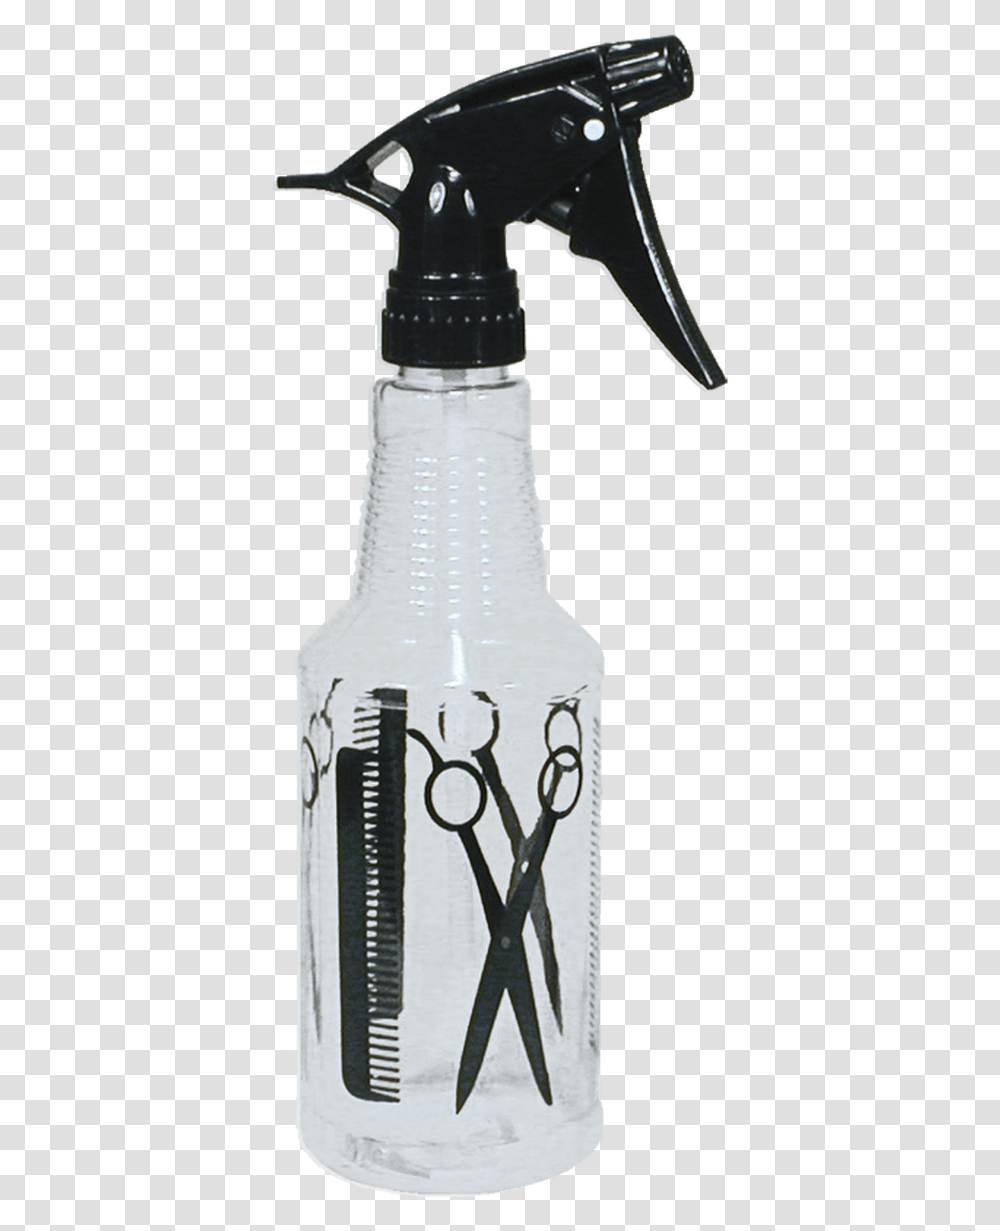 Spray Bottle Comb Amp Scissors Scissors And Comb Spray Bottle, Beverage, Drink, Alcohol, Liquor Transparent Png